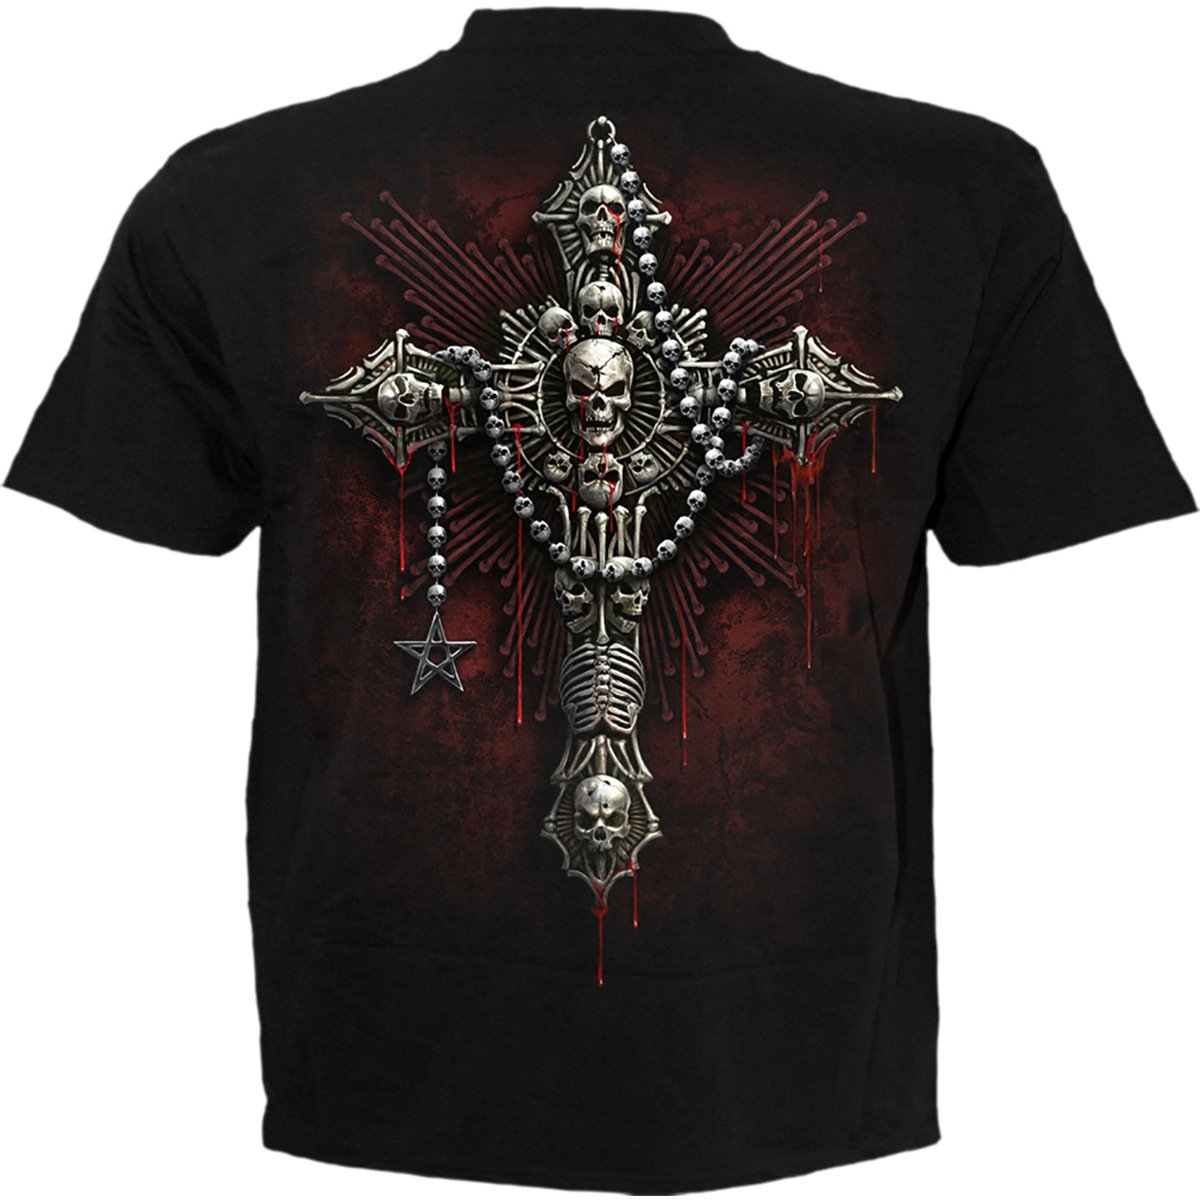 DEATH BONES - T-Shirt Black - Spiral USA